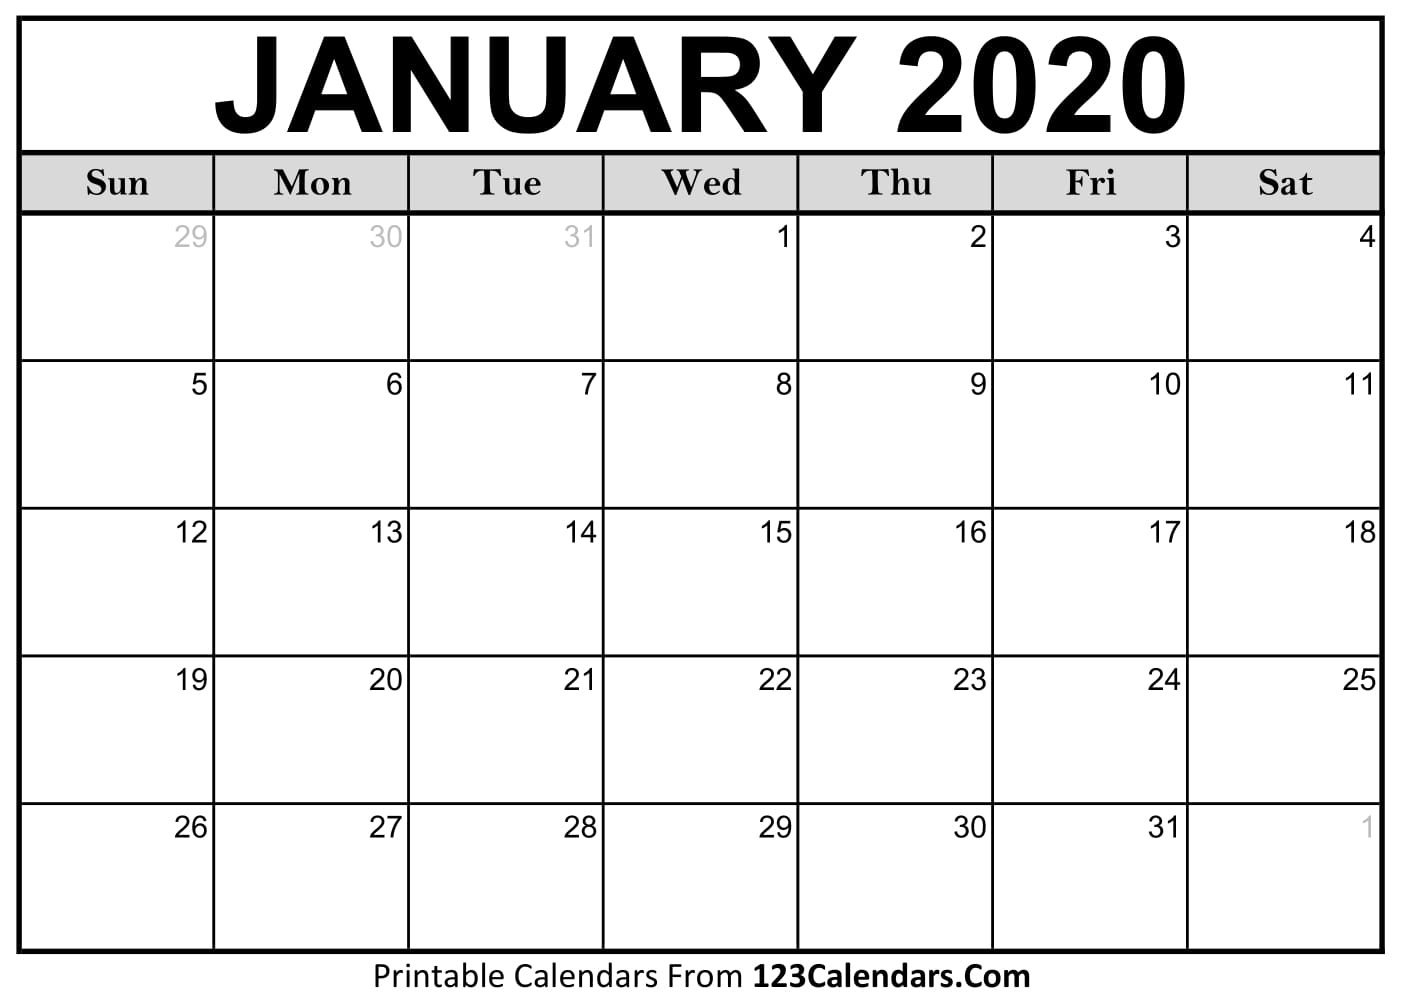 Free Printable Calendar | 123Calendars Exceptional Free Monthly Calendar 2018 2020 Printable